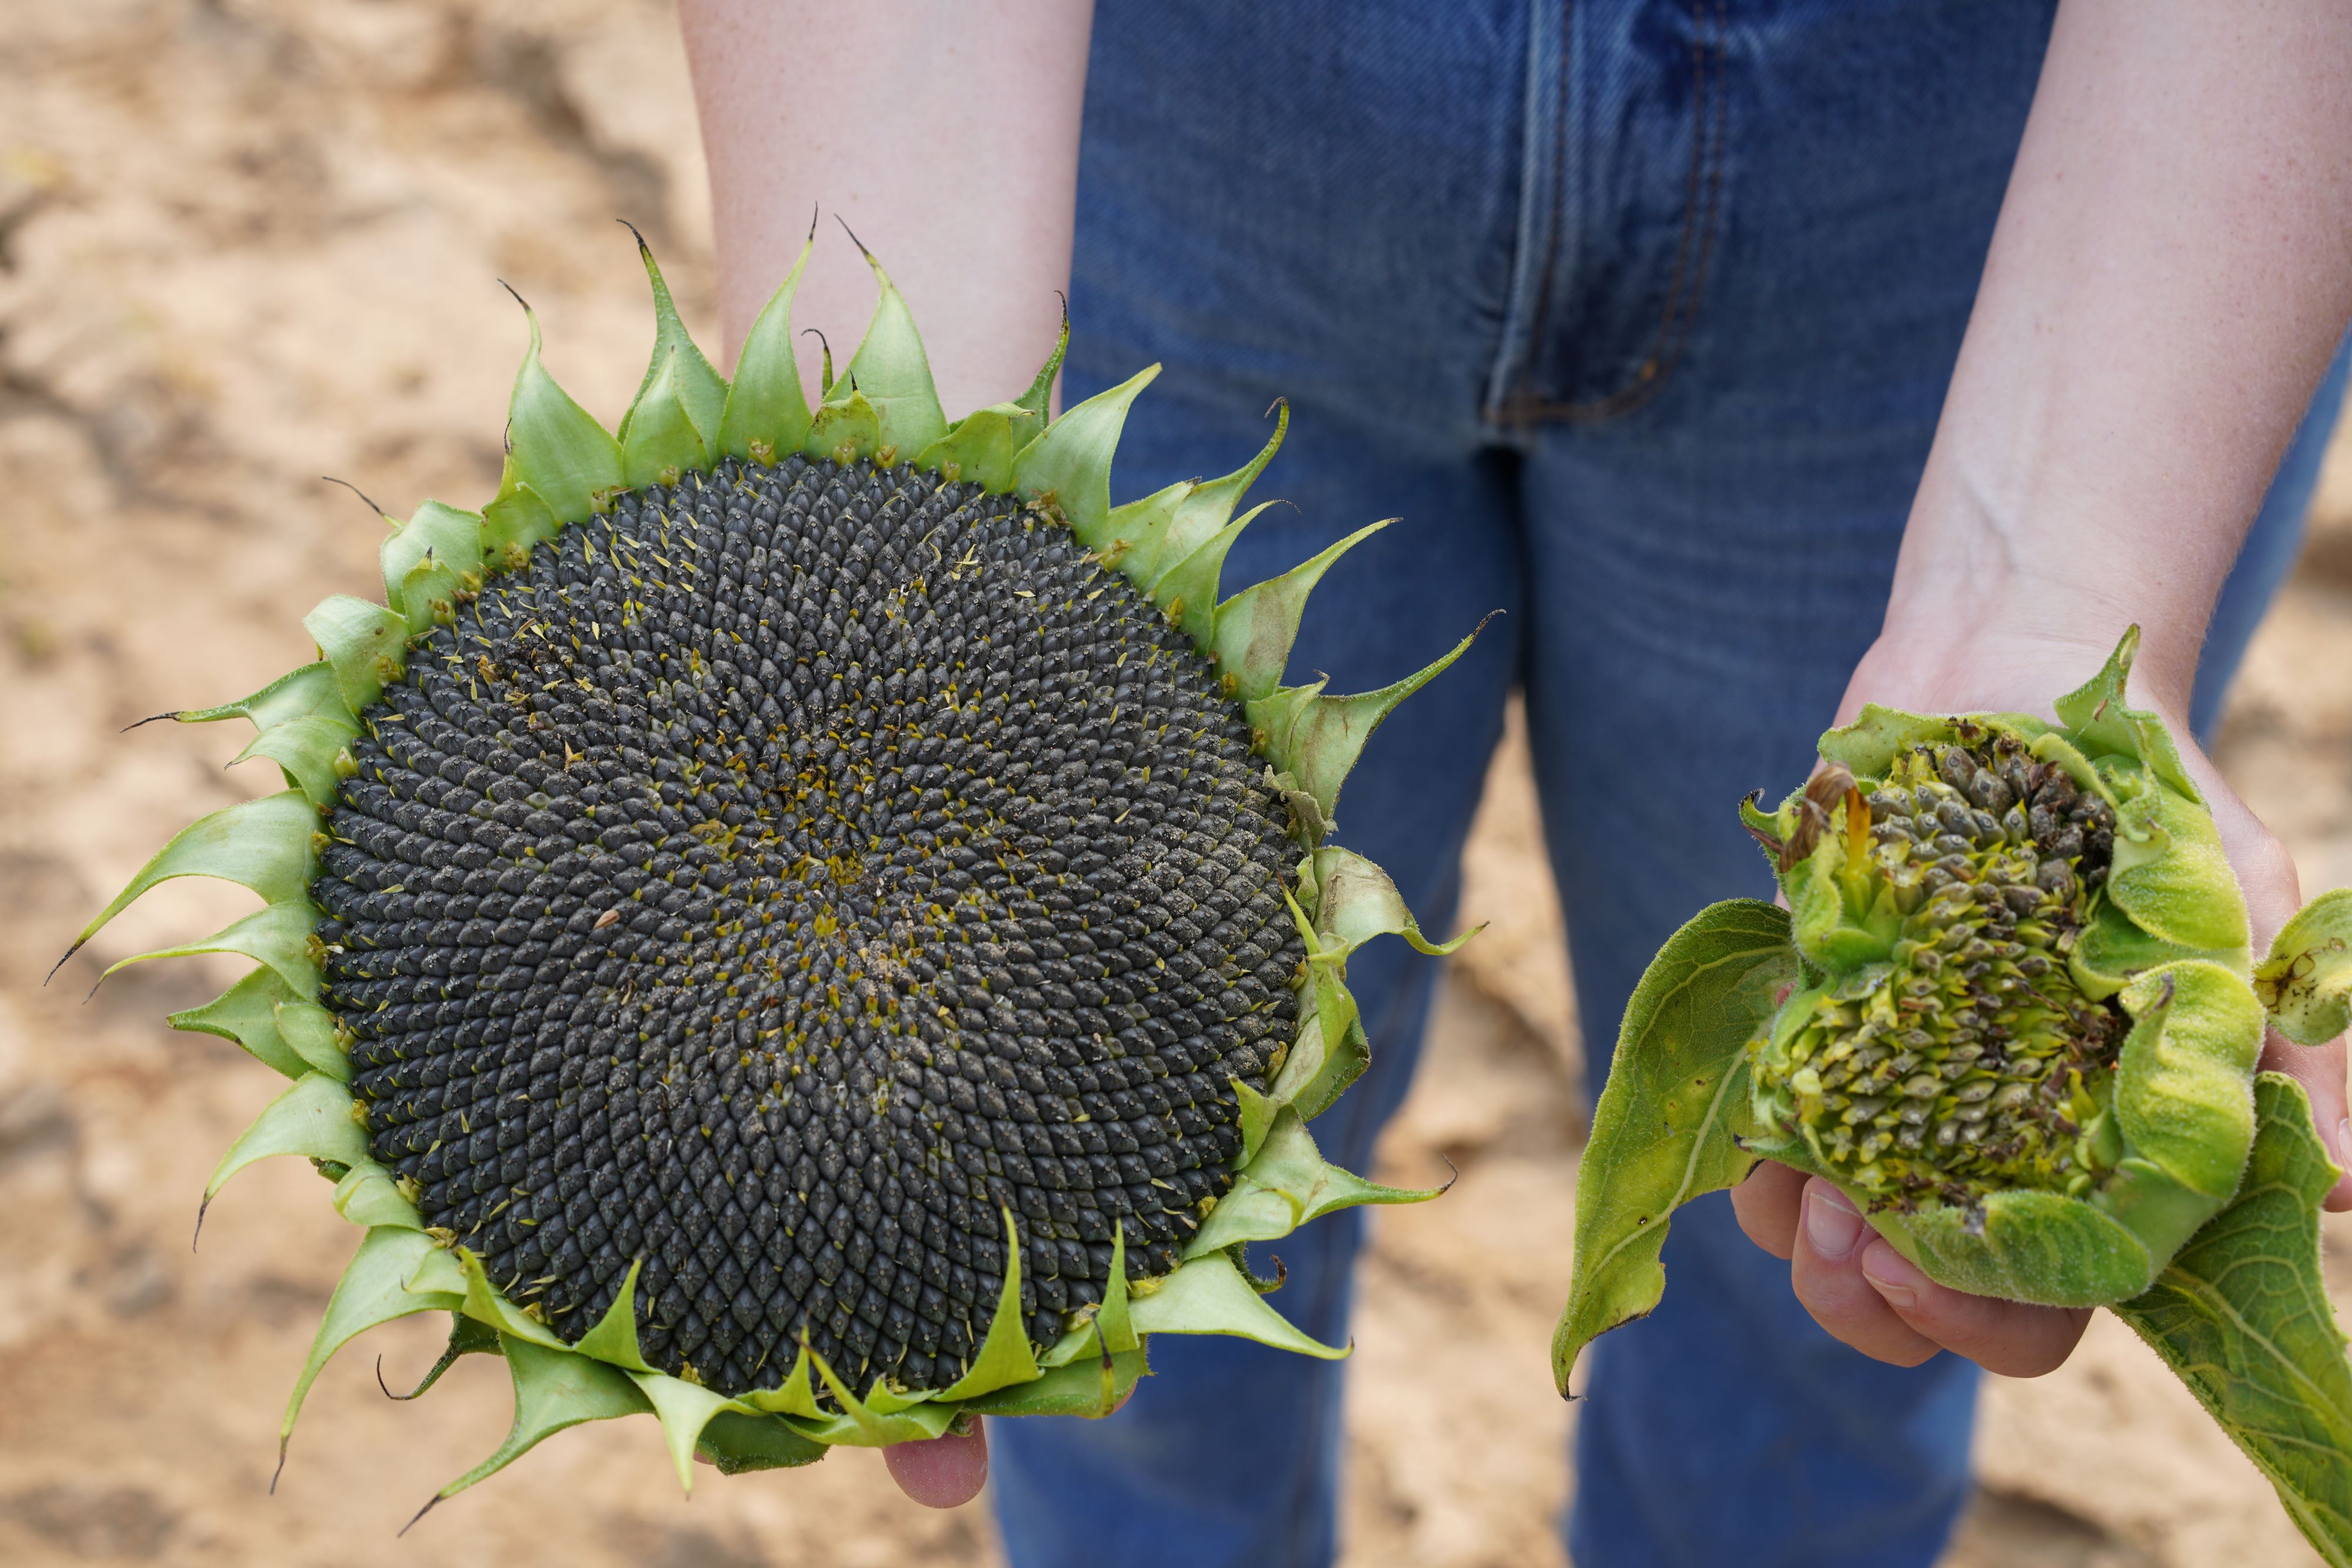 Seeds in a sunflower head.